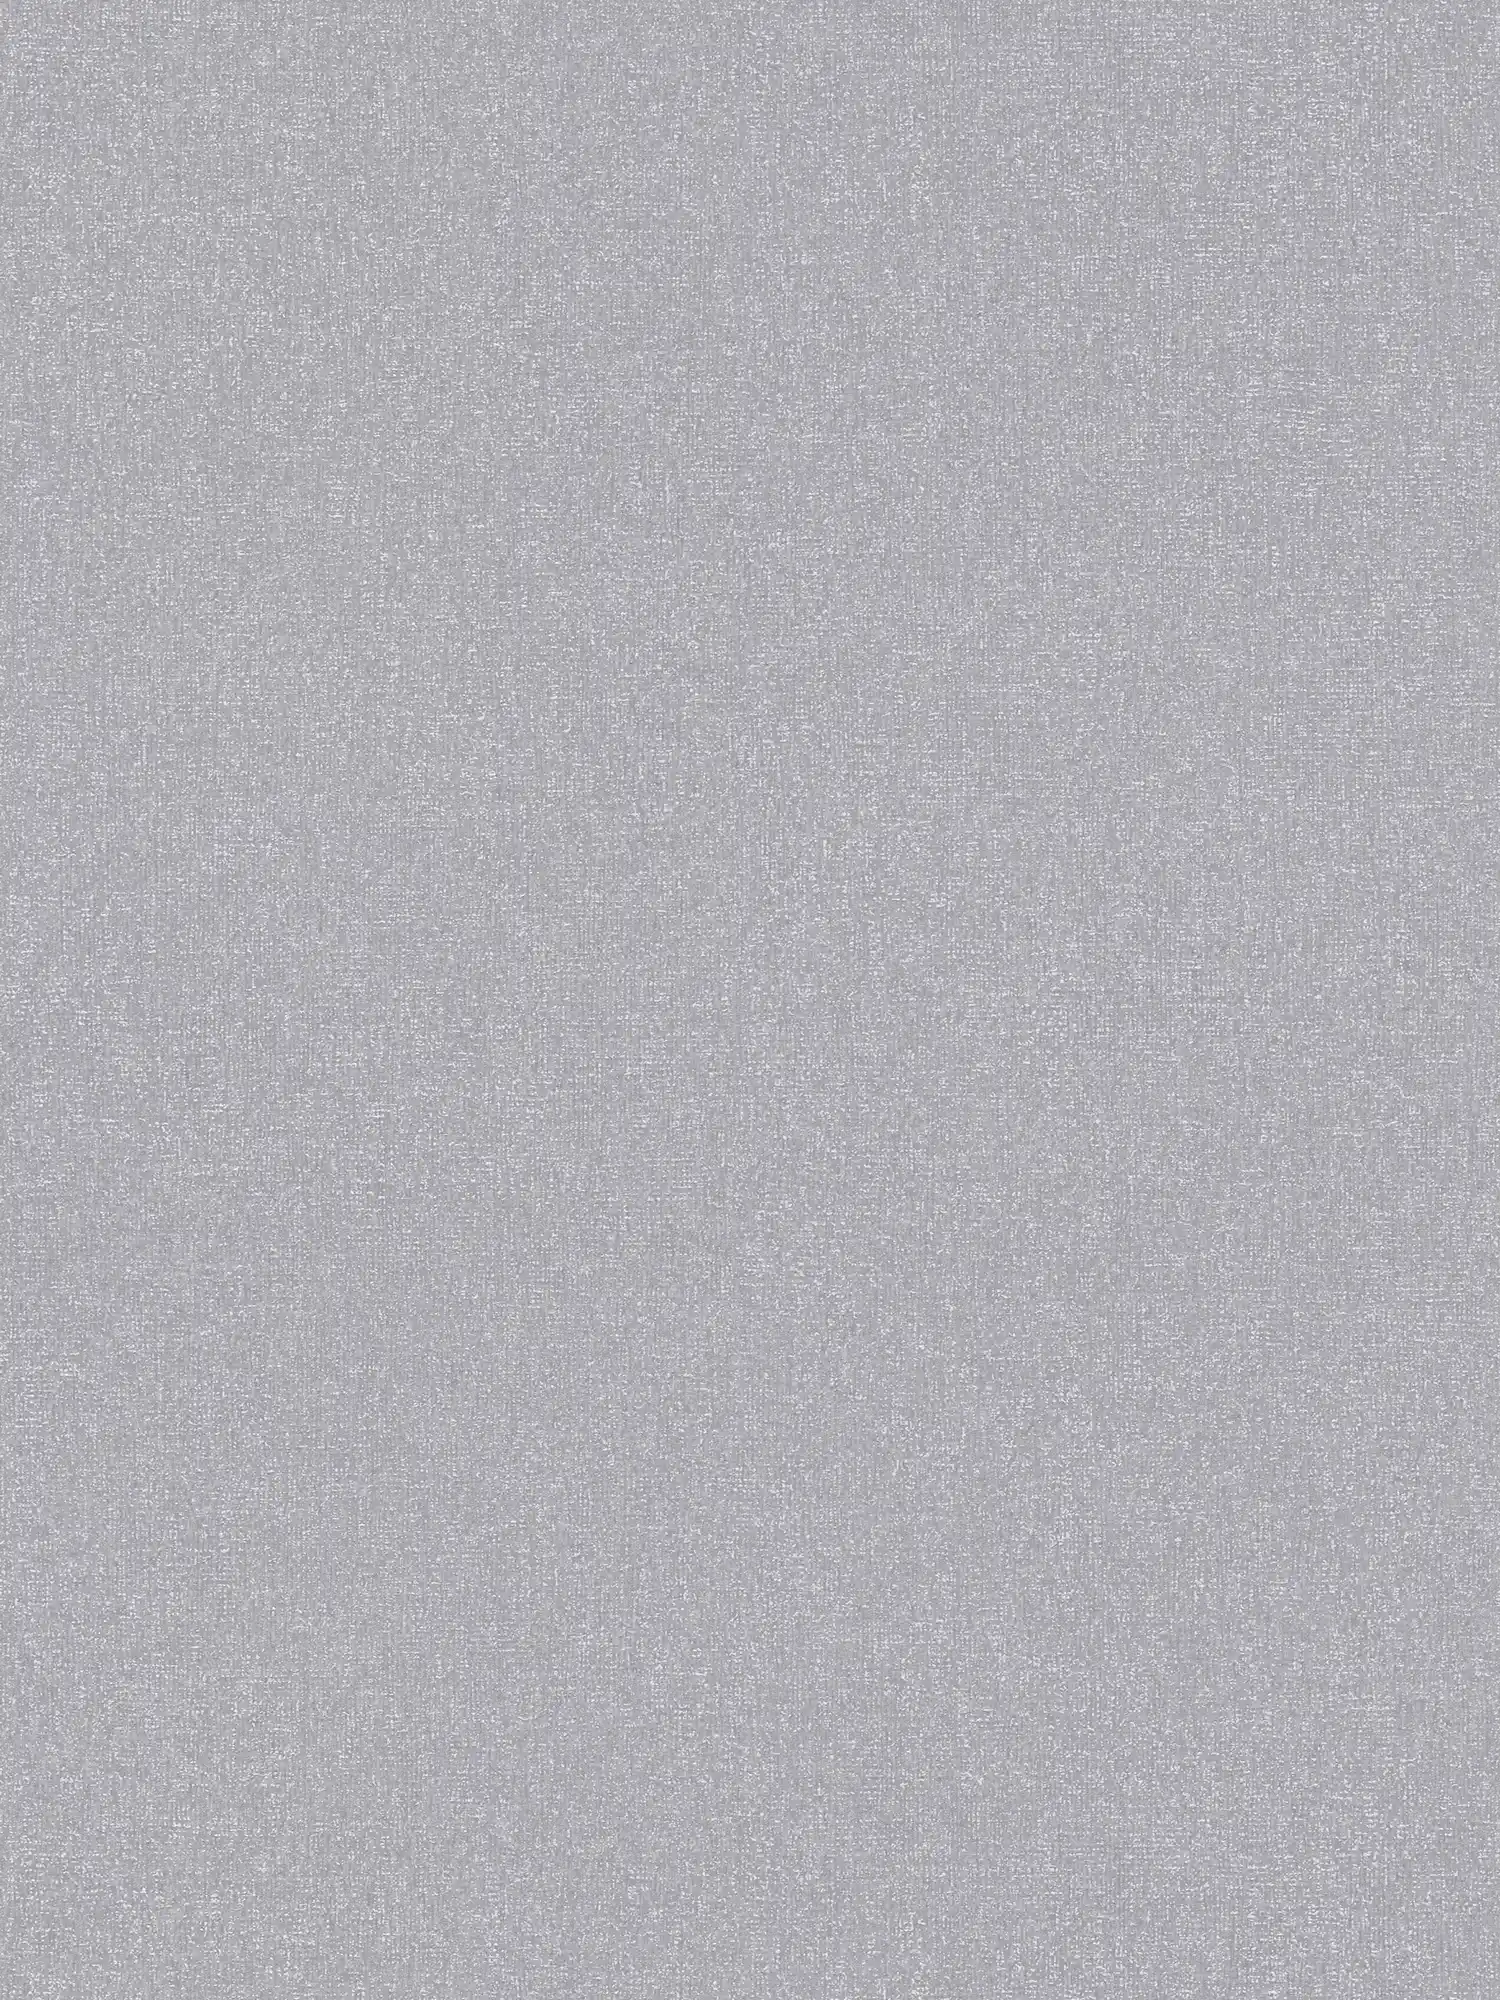 Papel pintado no tejido liso con estructura fina - gris
